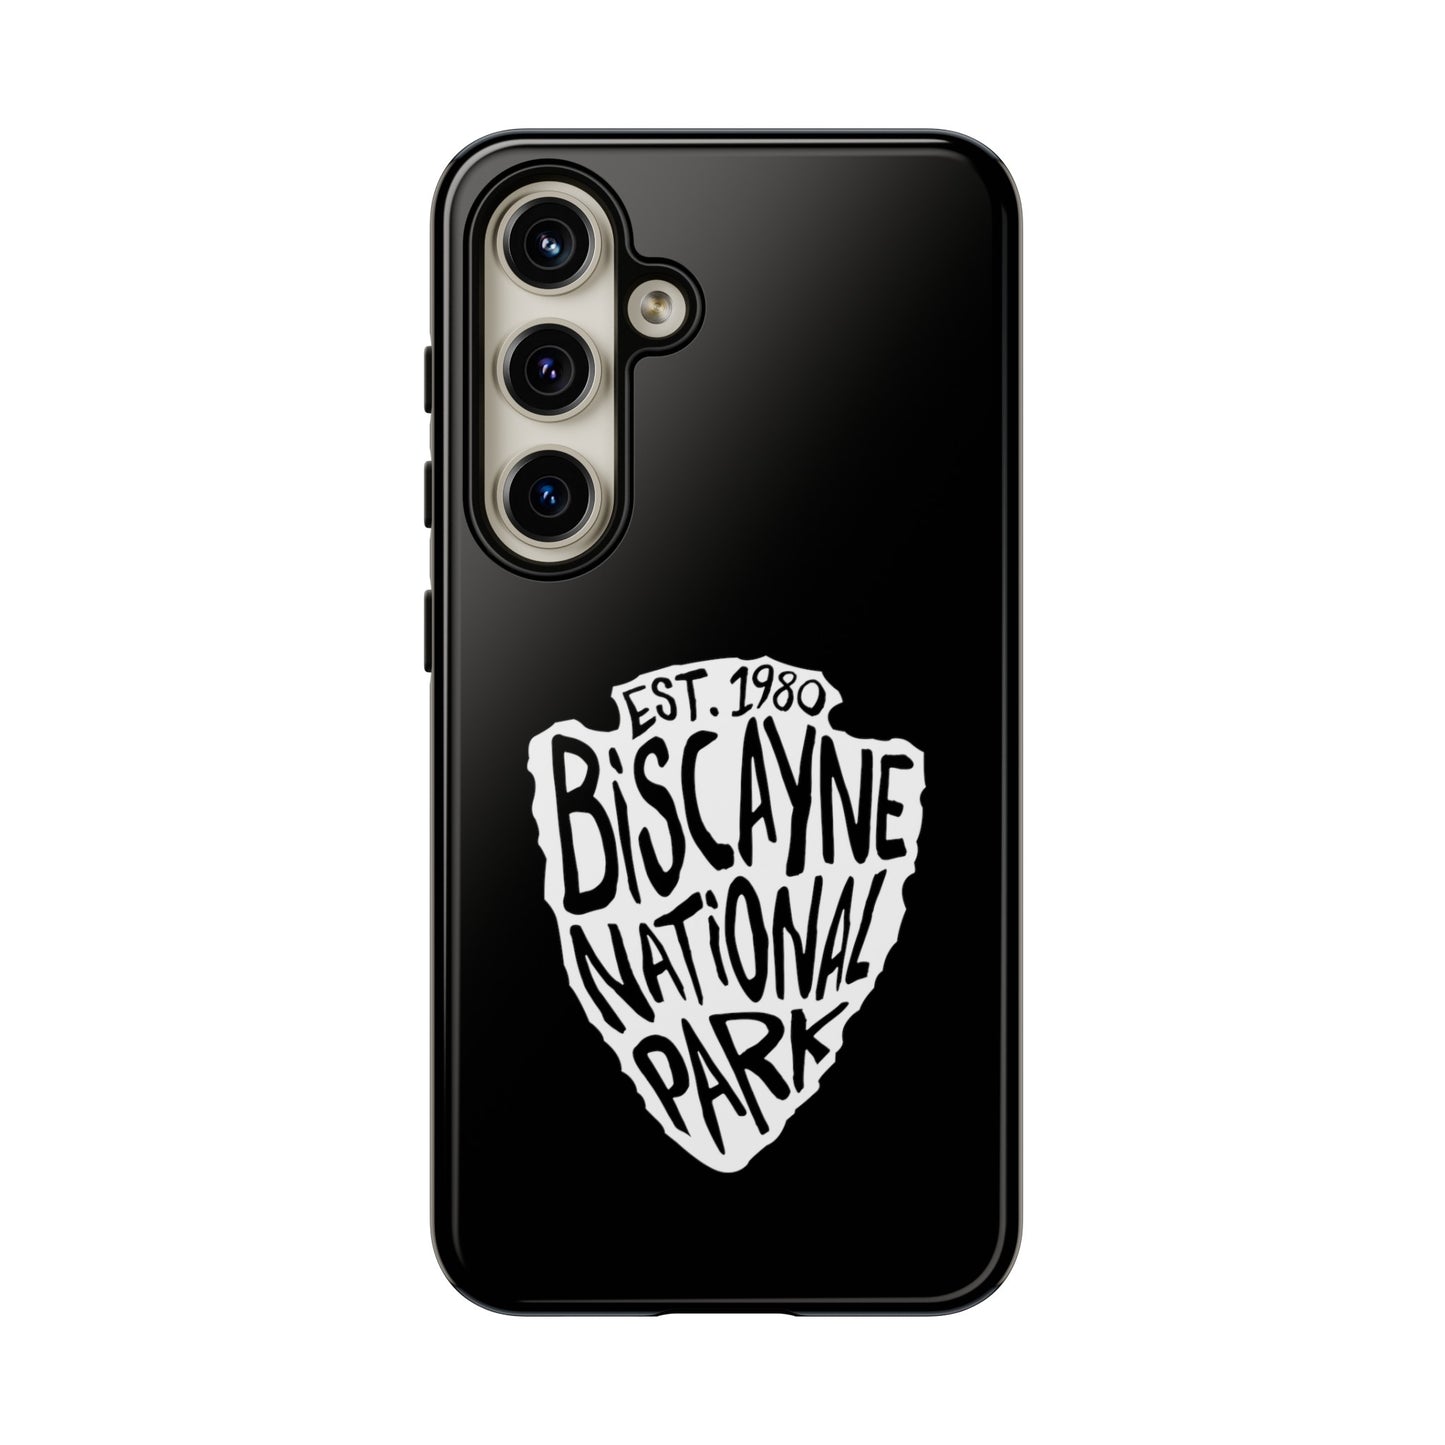 Biscayne National Park Phone Case - Arrowhead Design